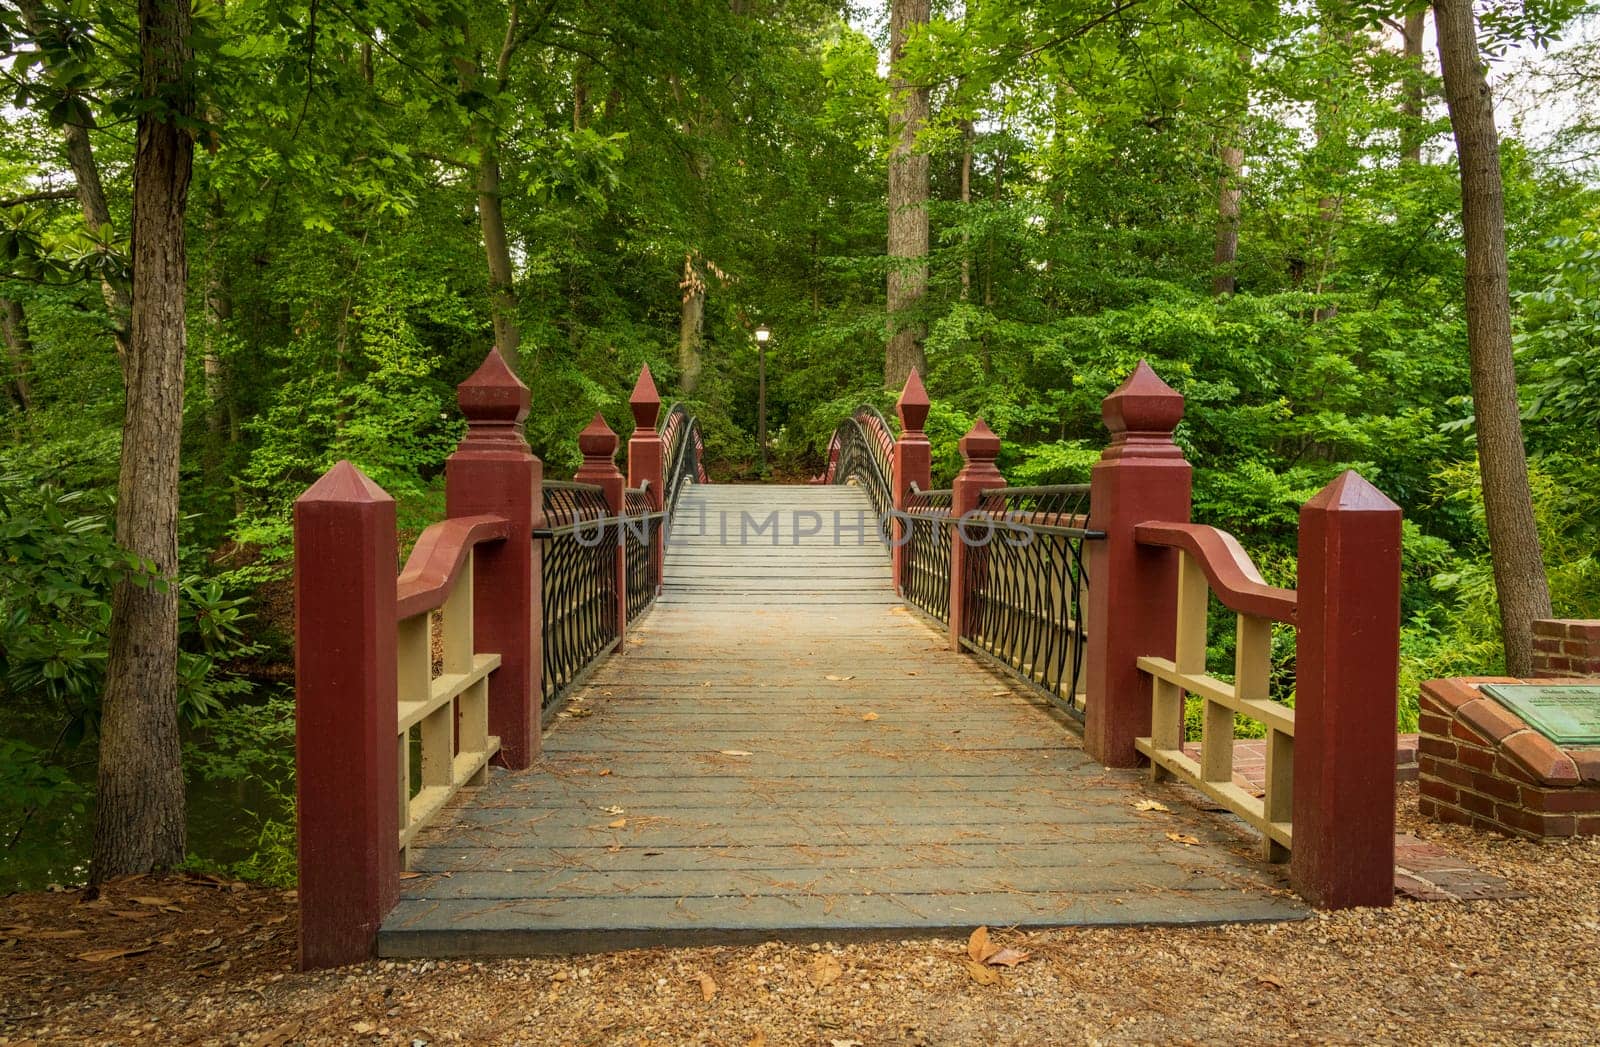 Ornate wooden bridge over Crim Dell on campus of William and Mary college in Williamsburg Virginia